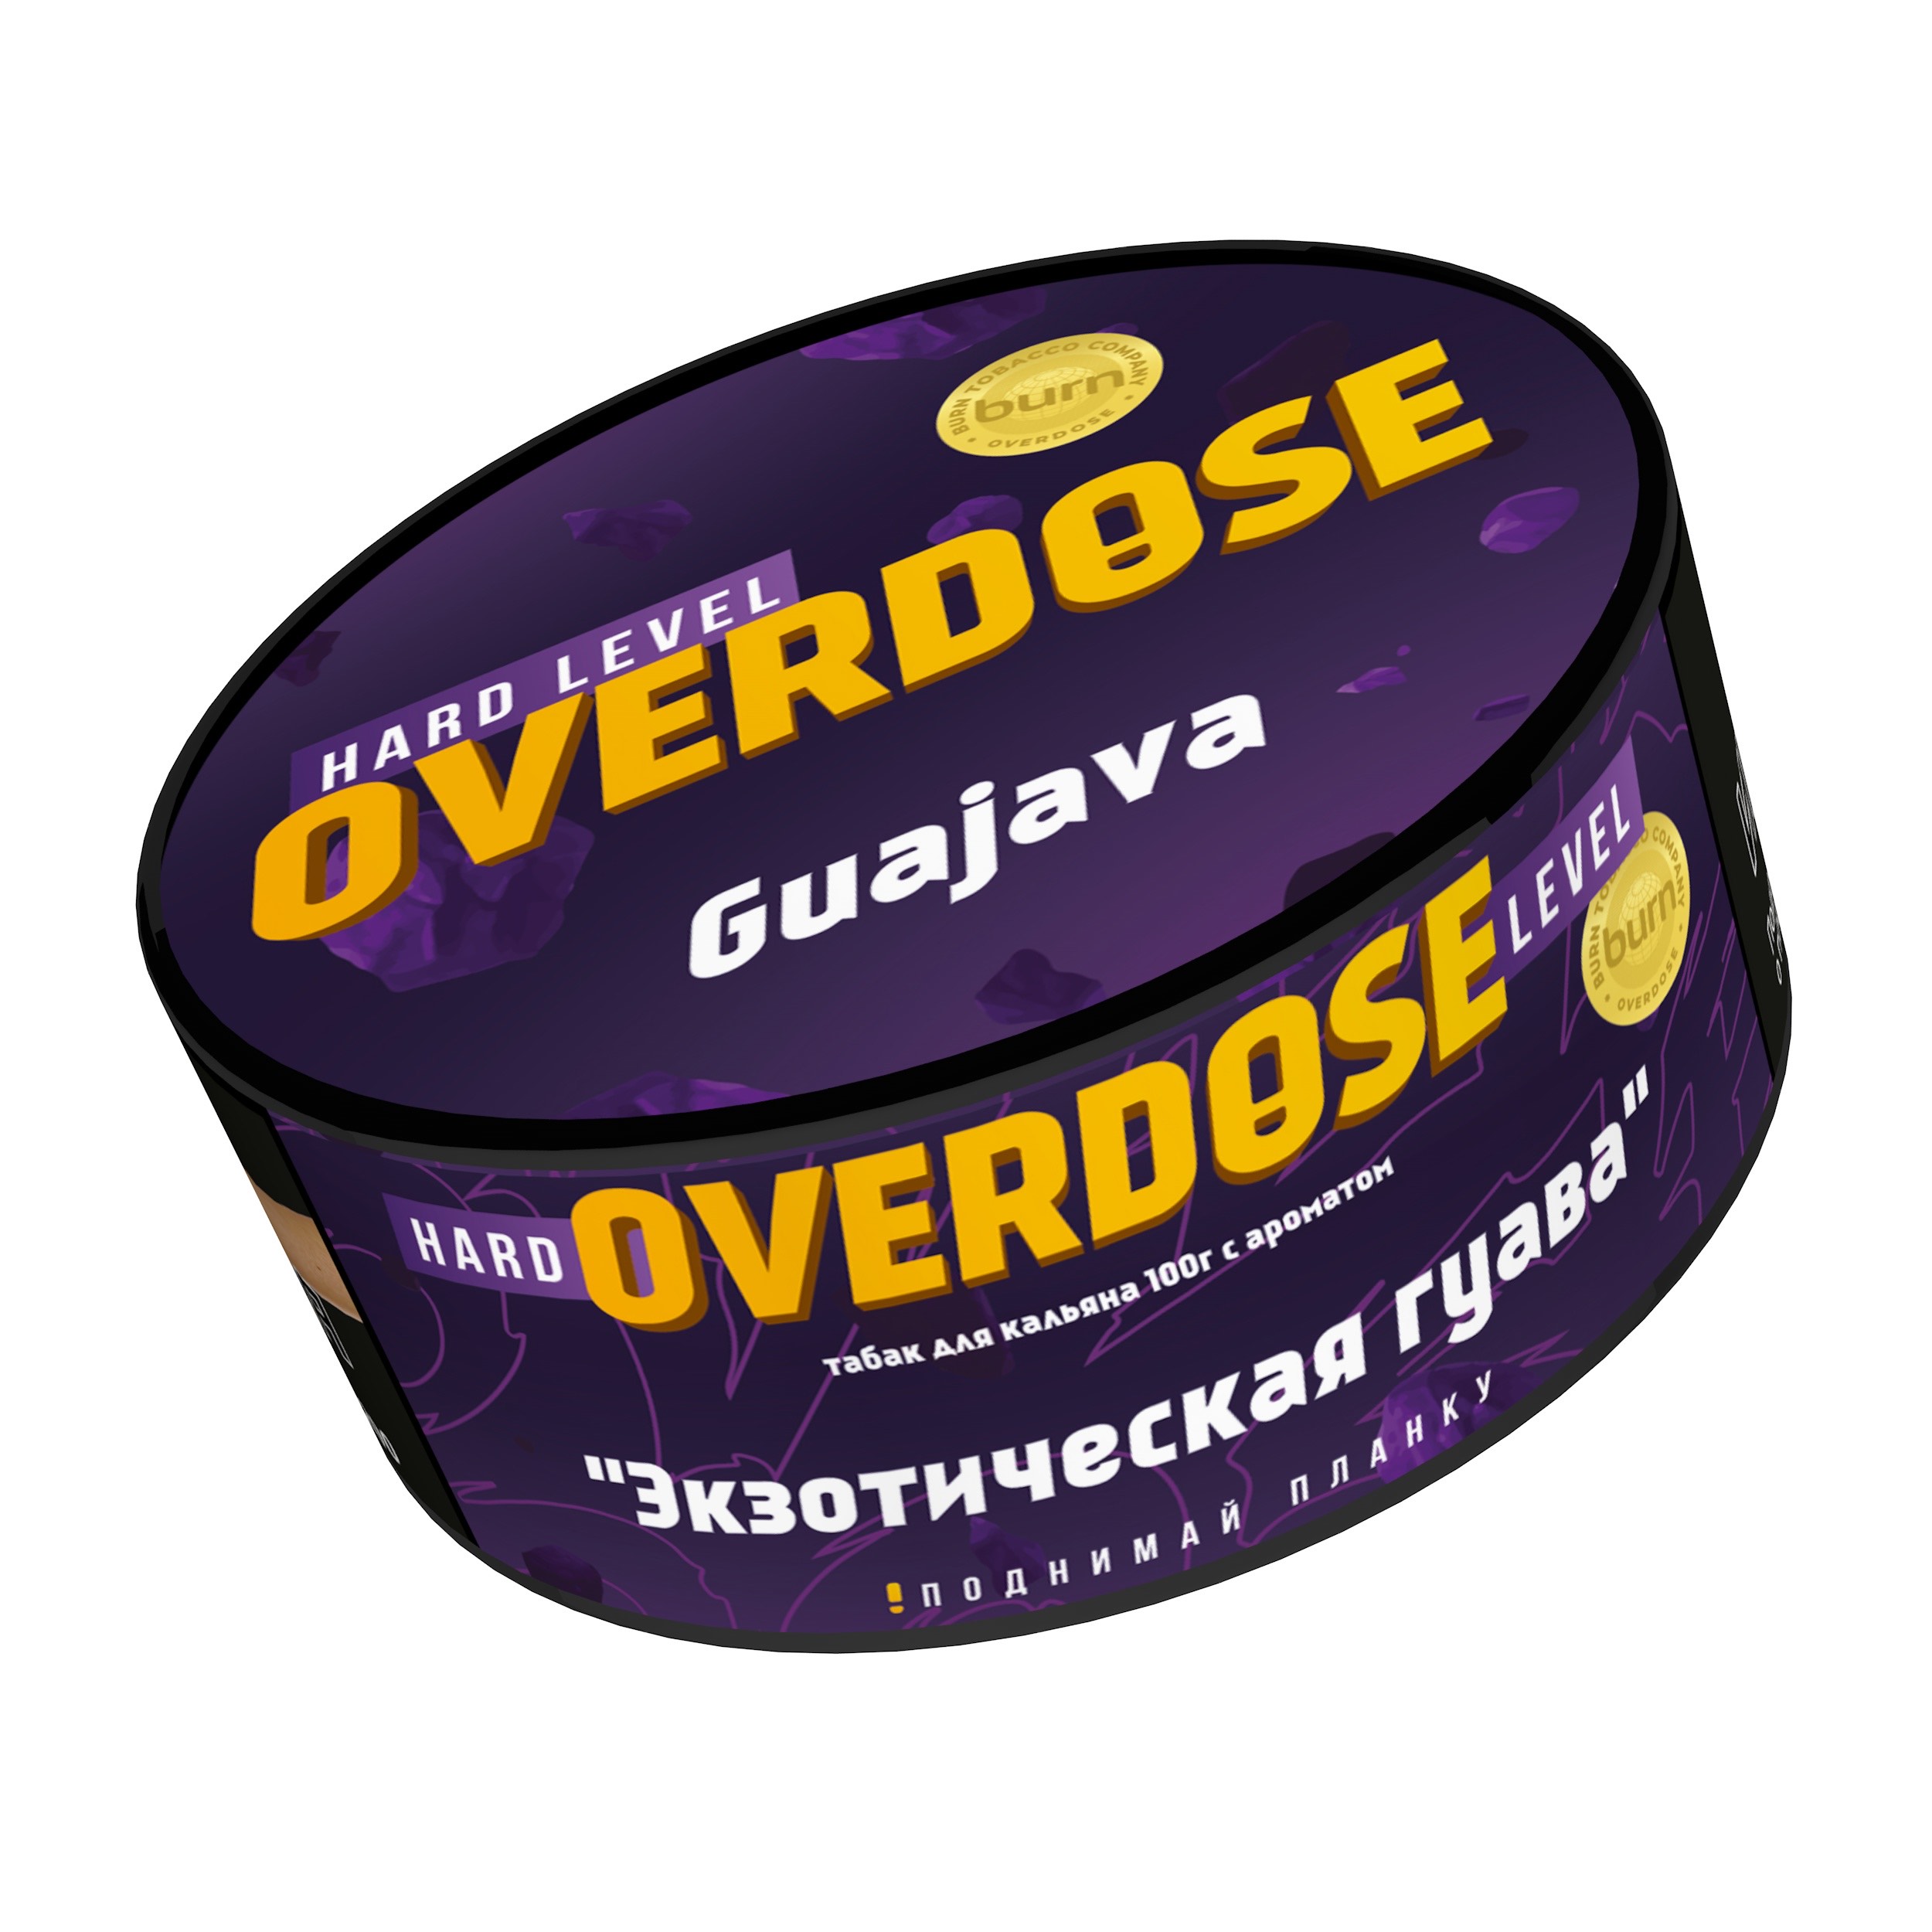 Табак - Overdose - Guajava - 100 g